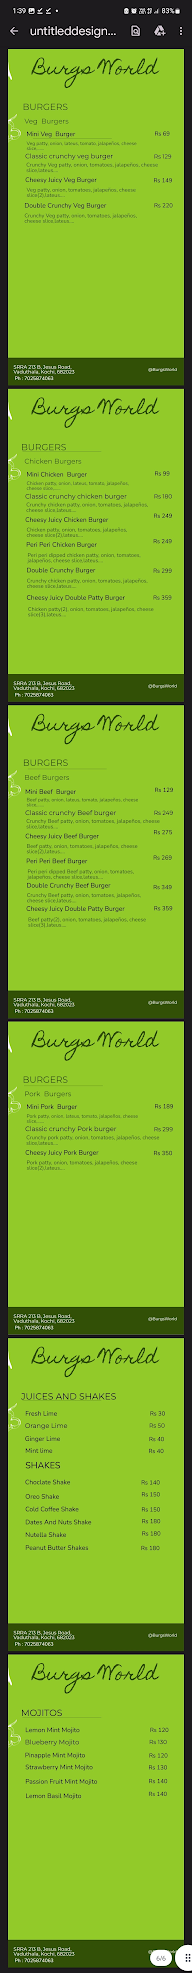 Burgs World menu 1